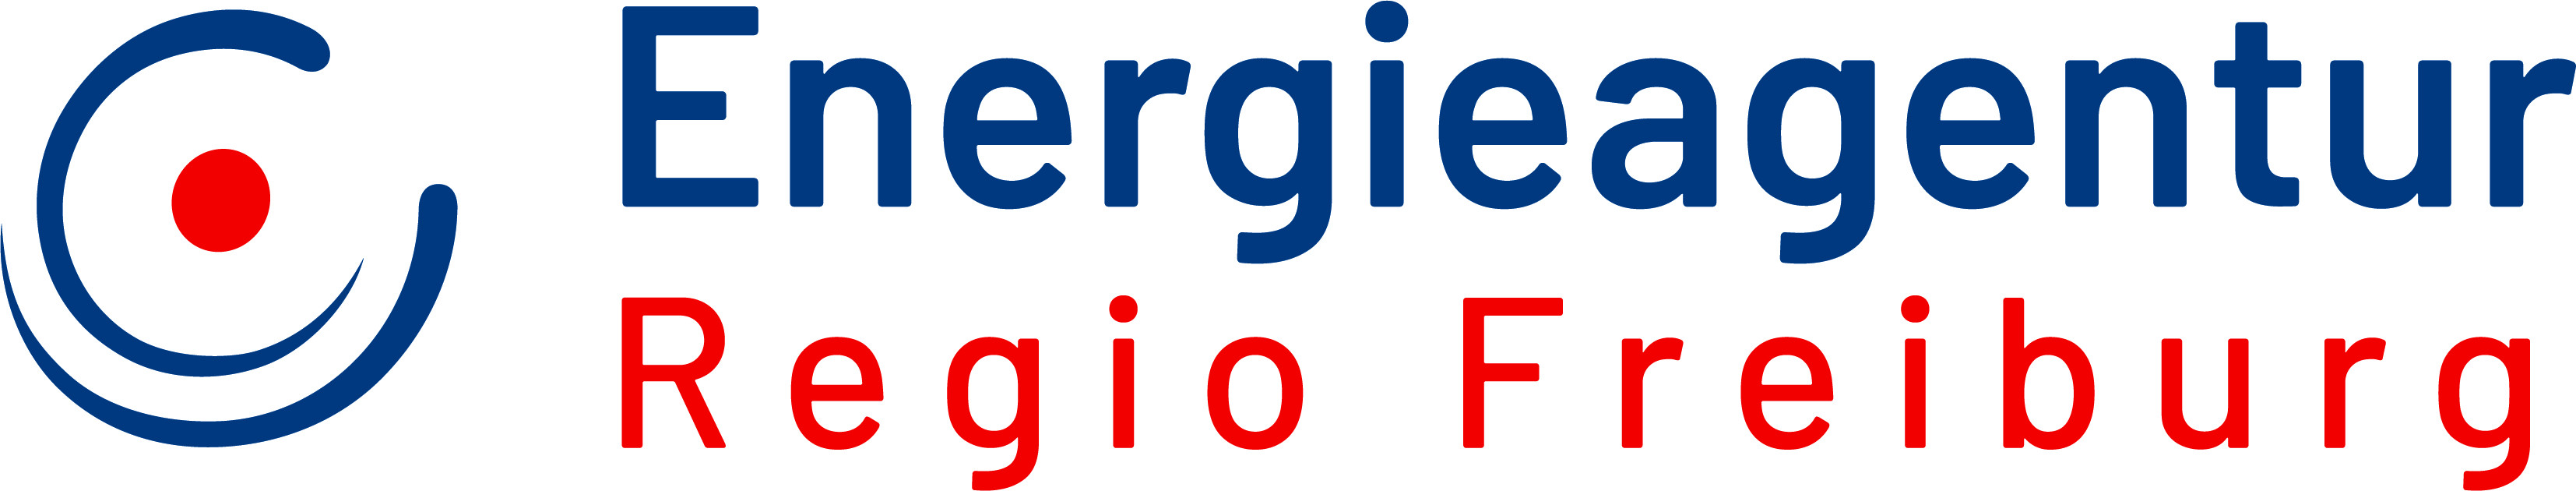 Logo Energieagentur Regio Freiburg.jpg